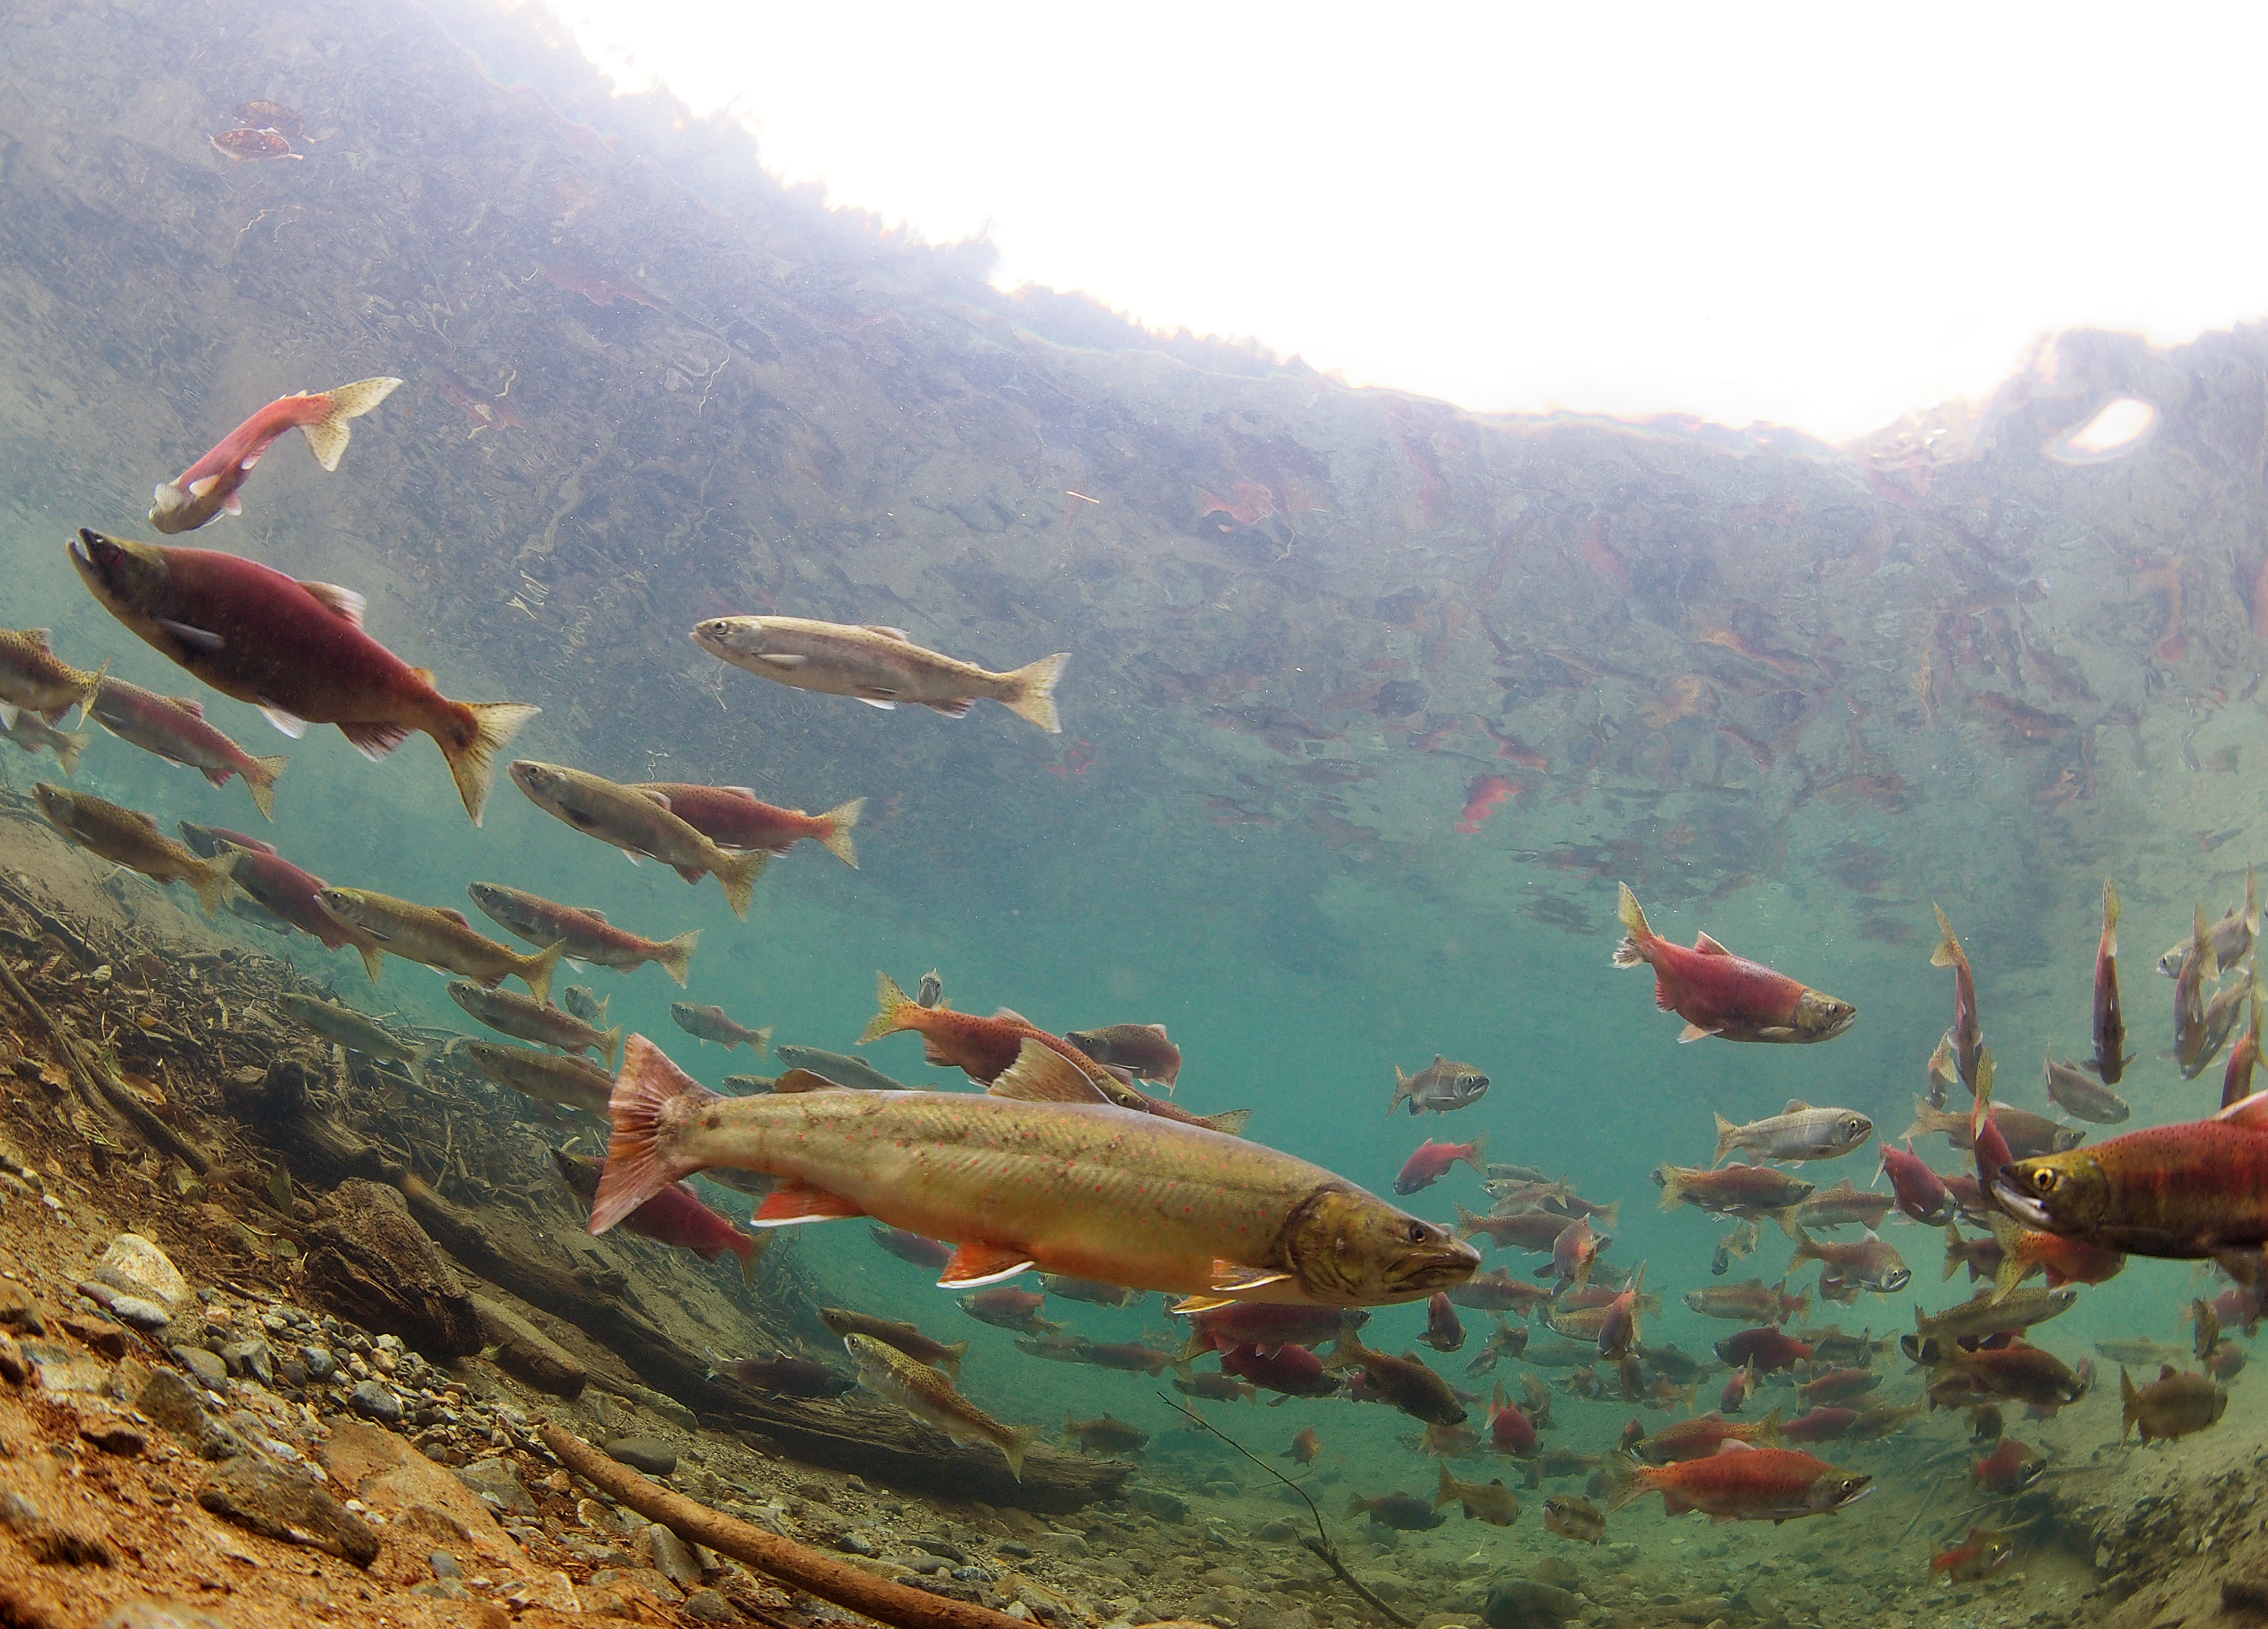 Bull trout and kokanee salmon underwater